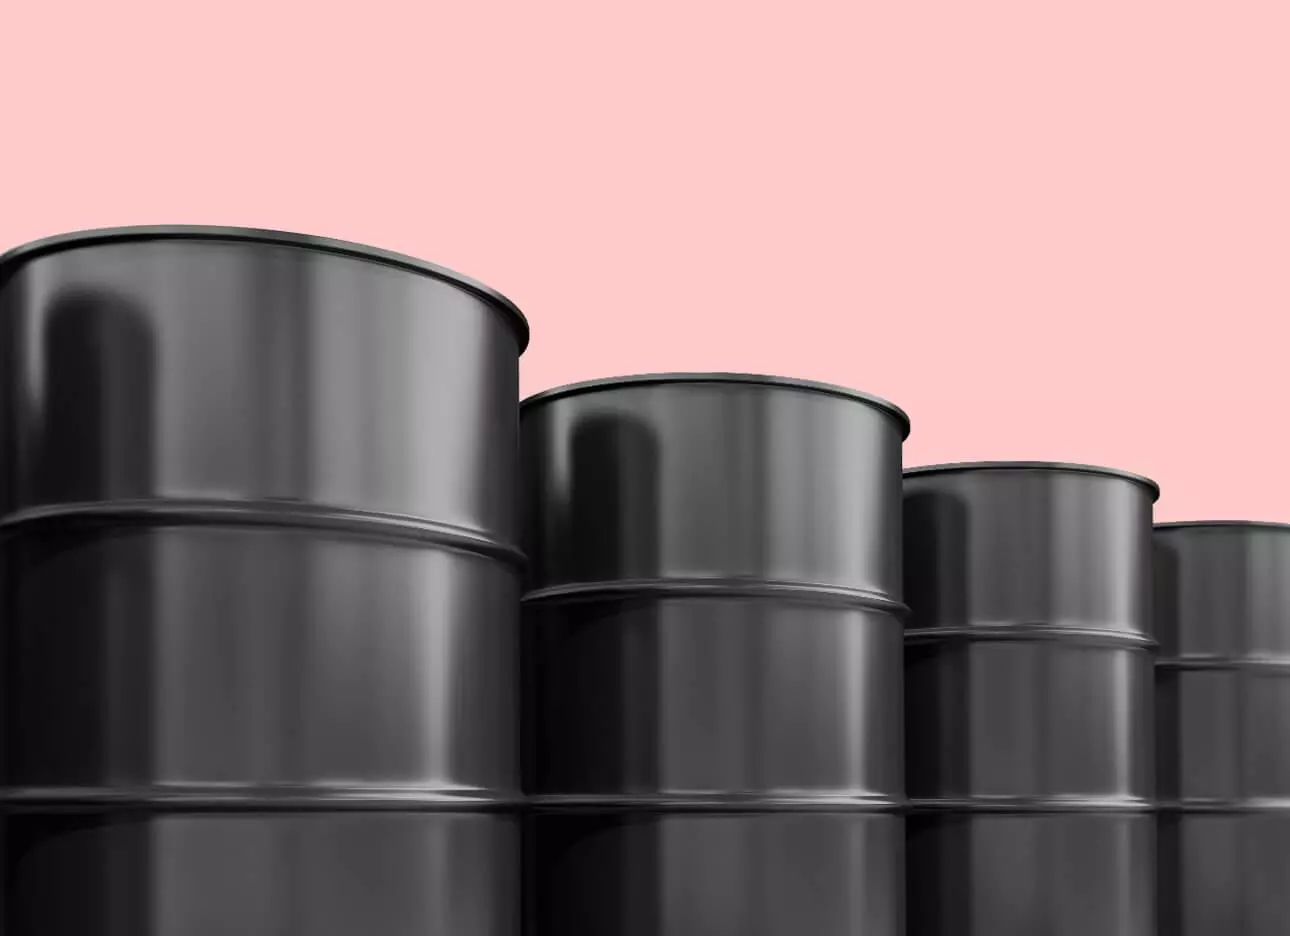 Oil trading platform